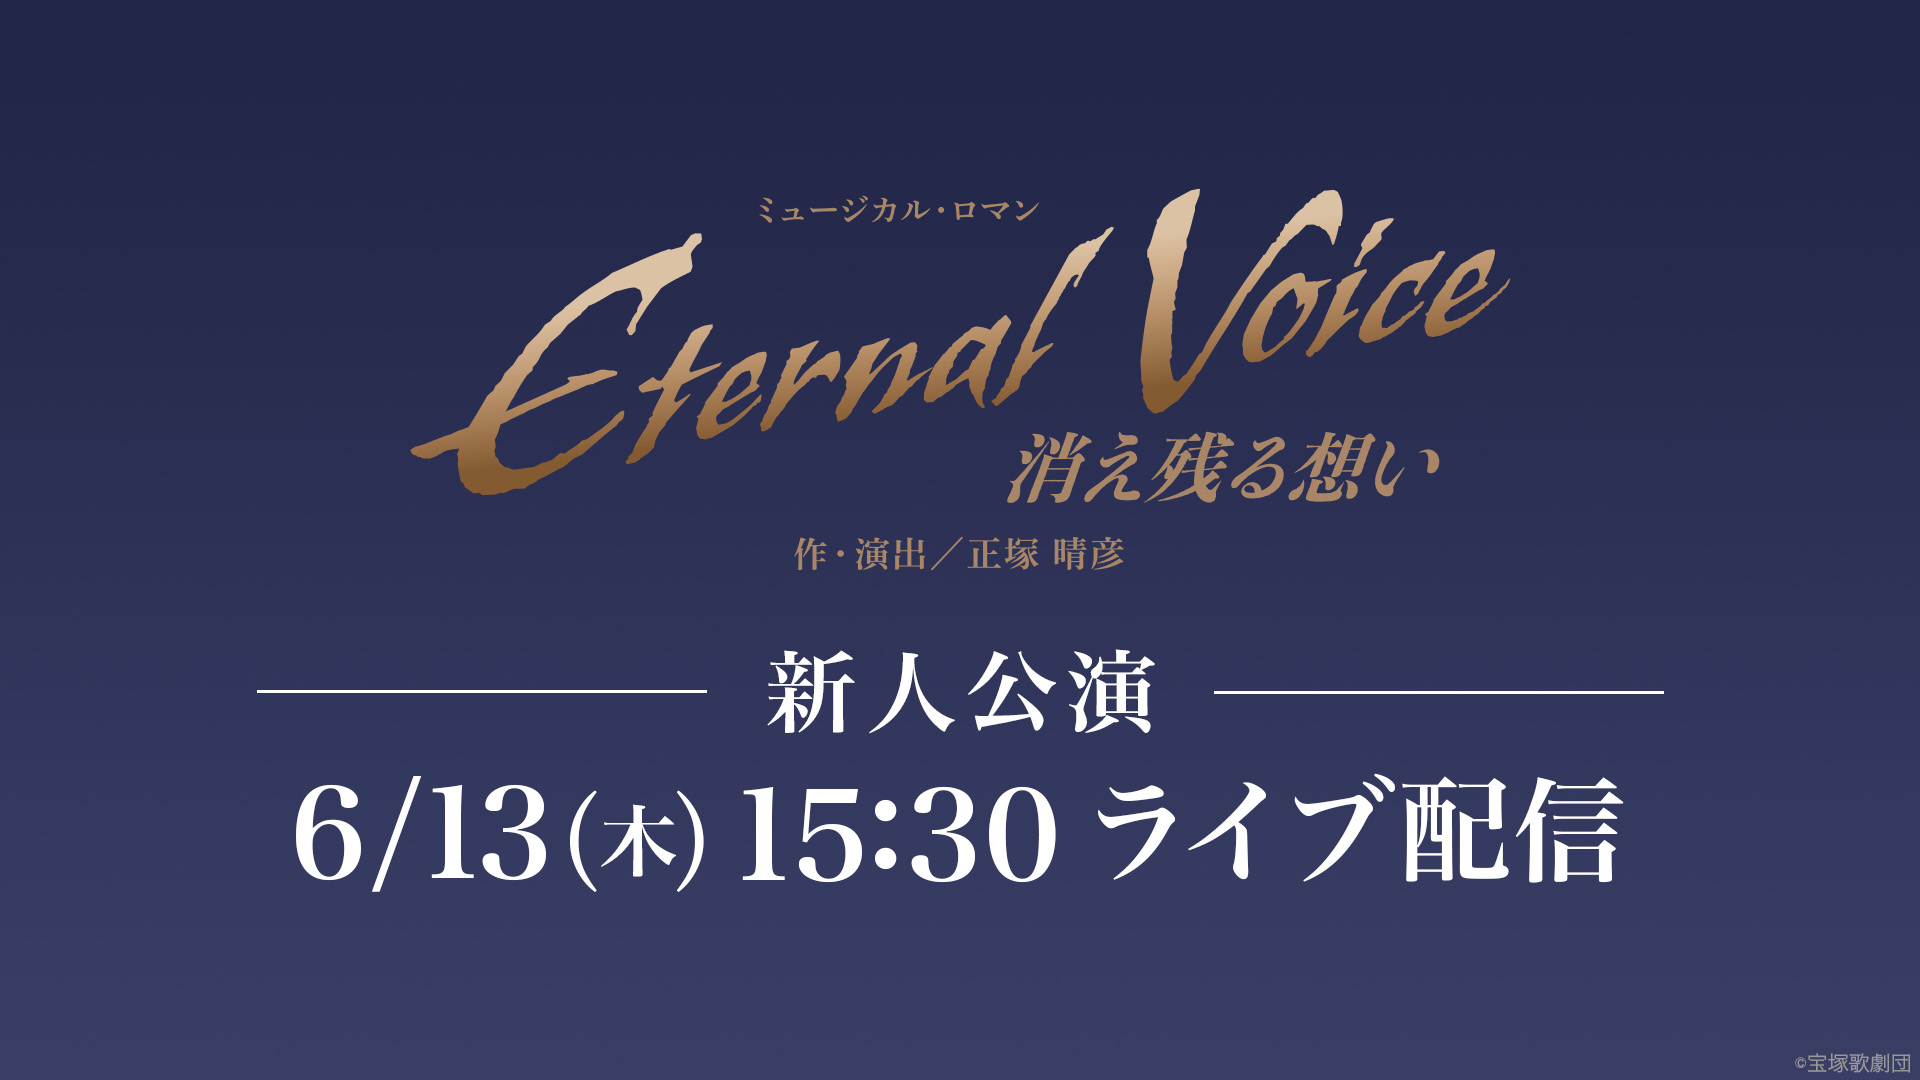 月組 東京宝塚劇場 新人公演 『Eternal Voice 消え残る想い』LIVE配信